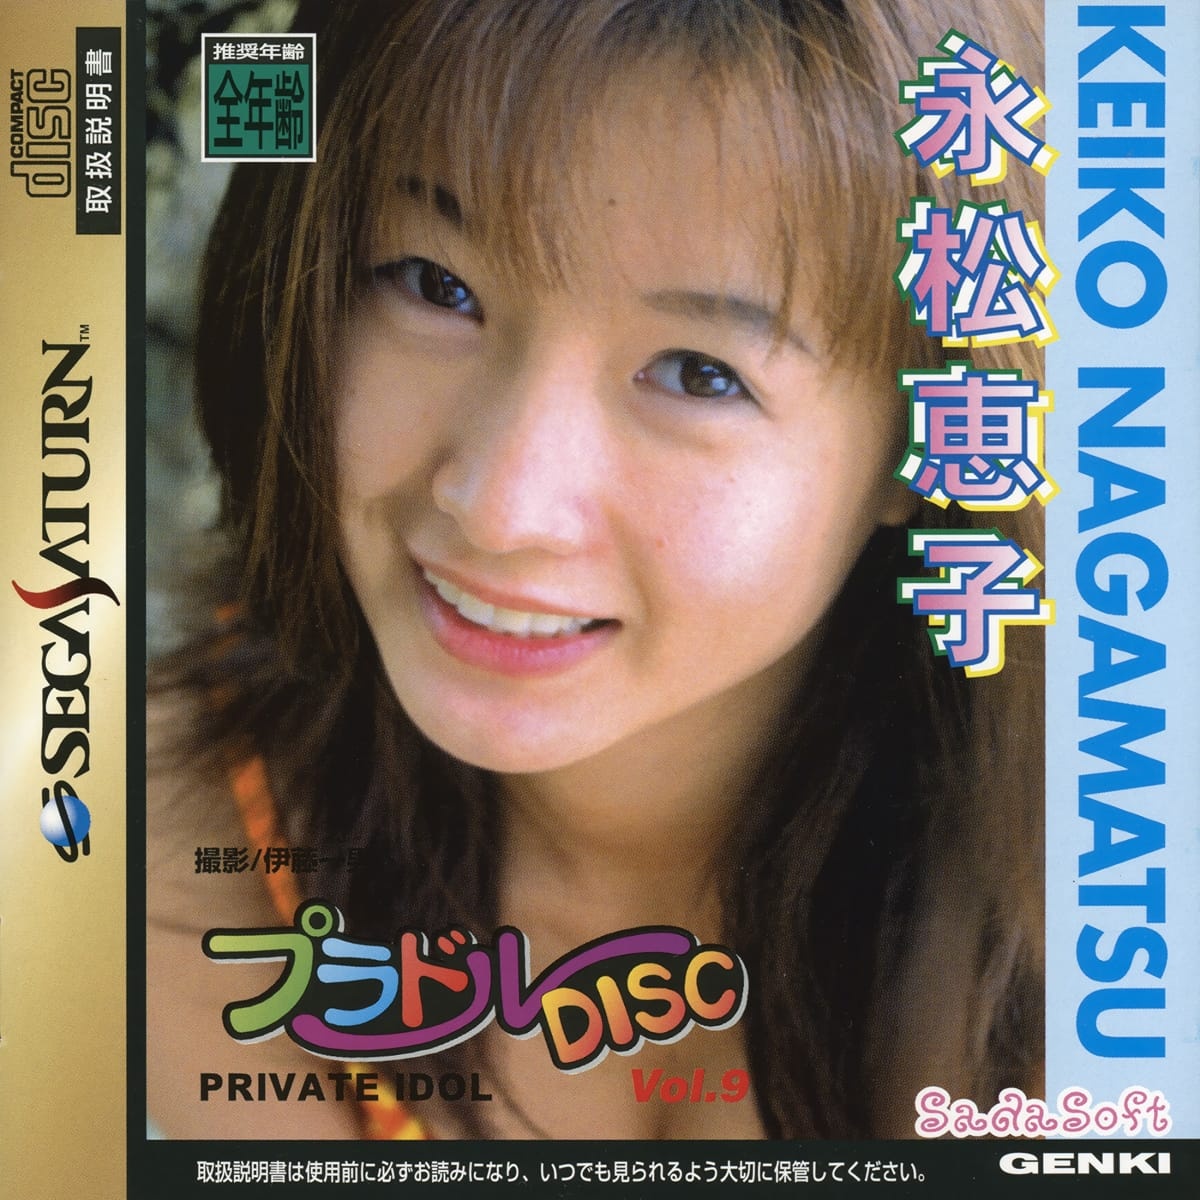 Capa do jogo Private Idol Disc Vol. 9: Nagamatsu Keiko